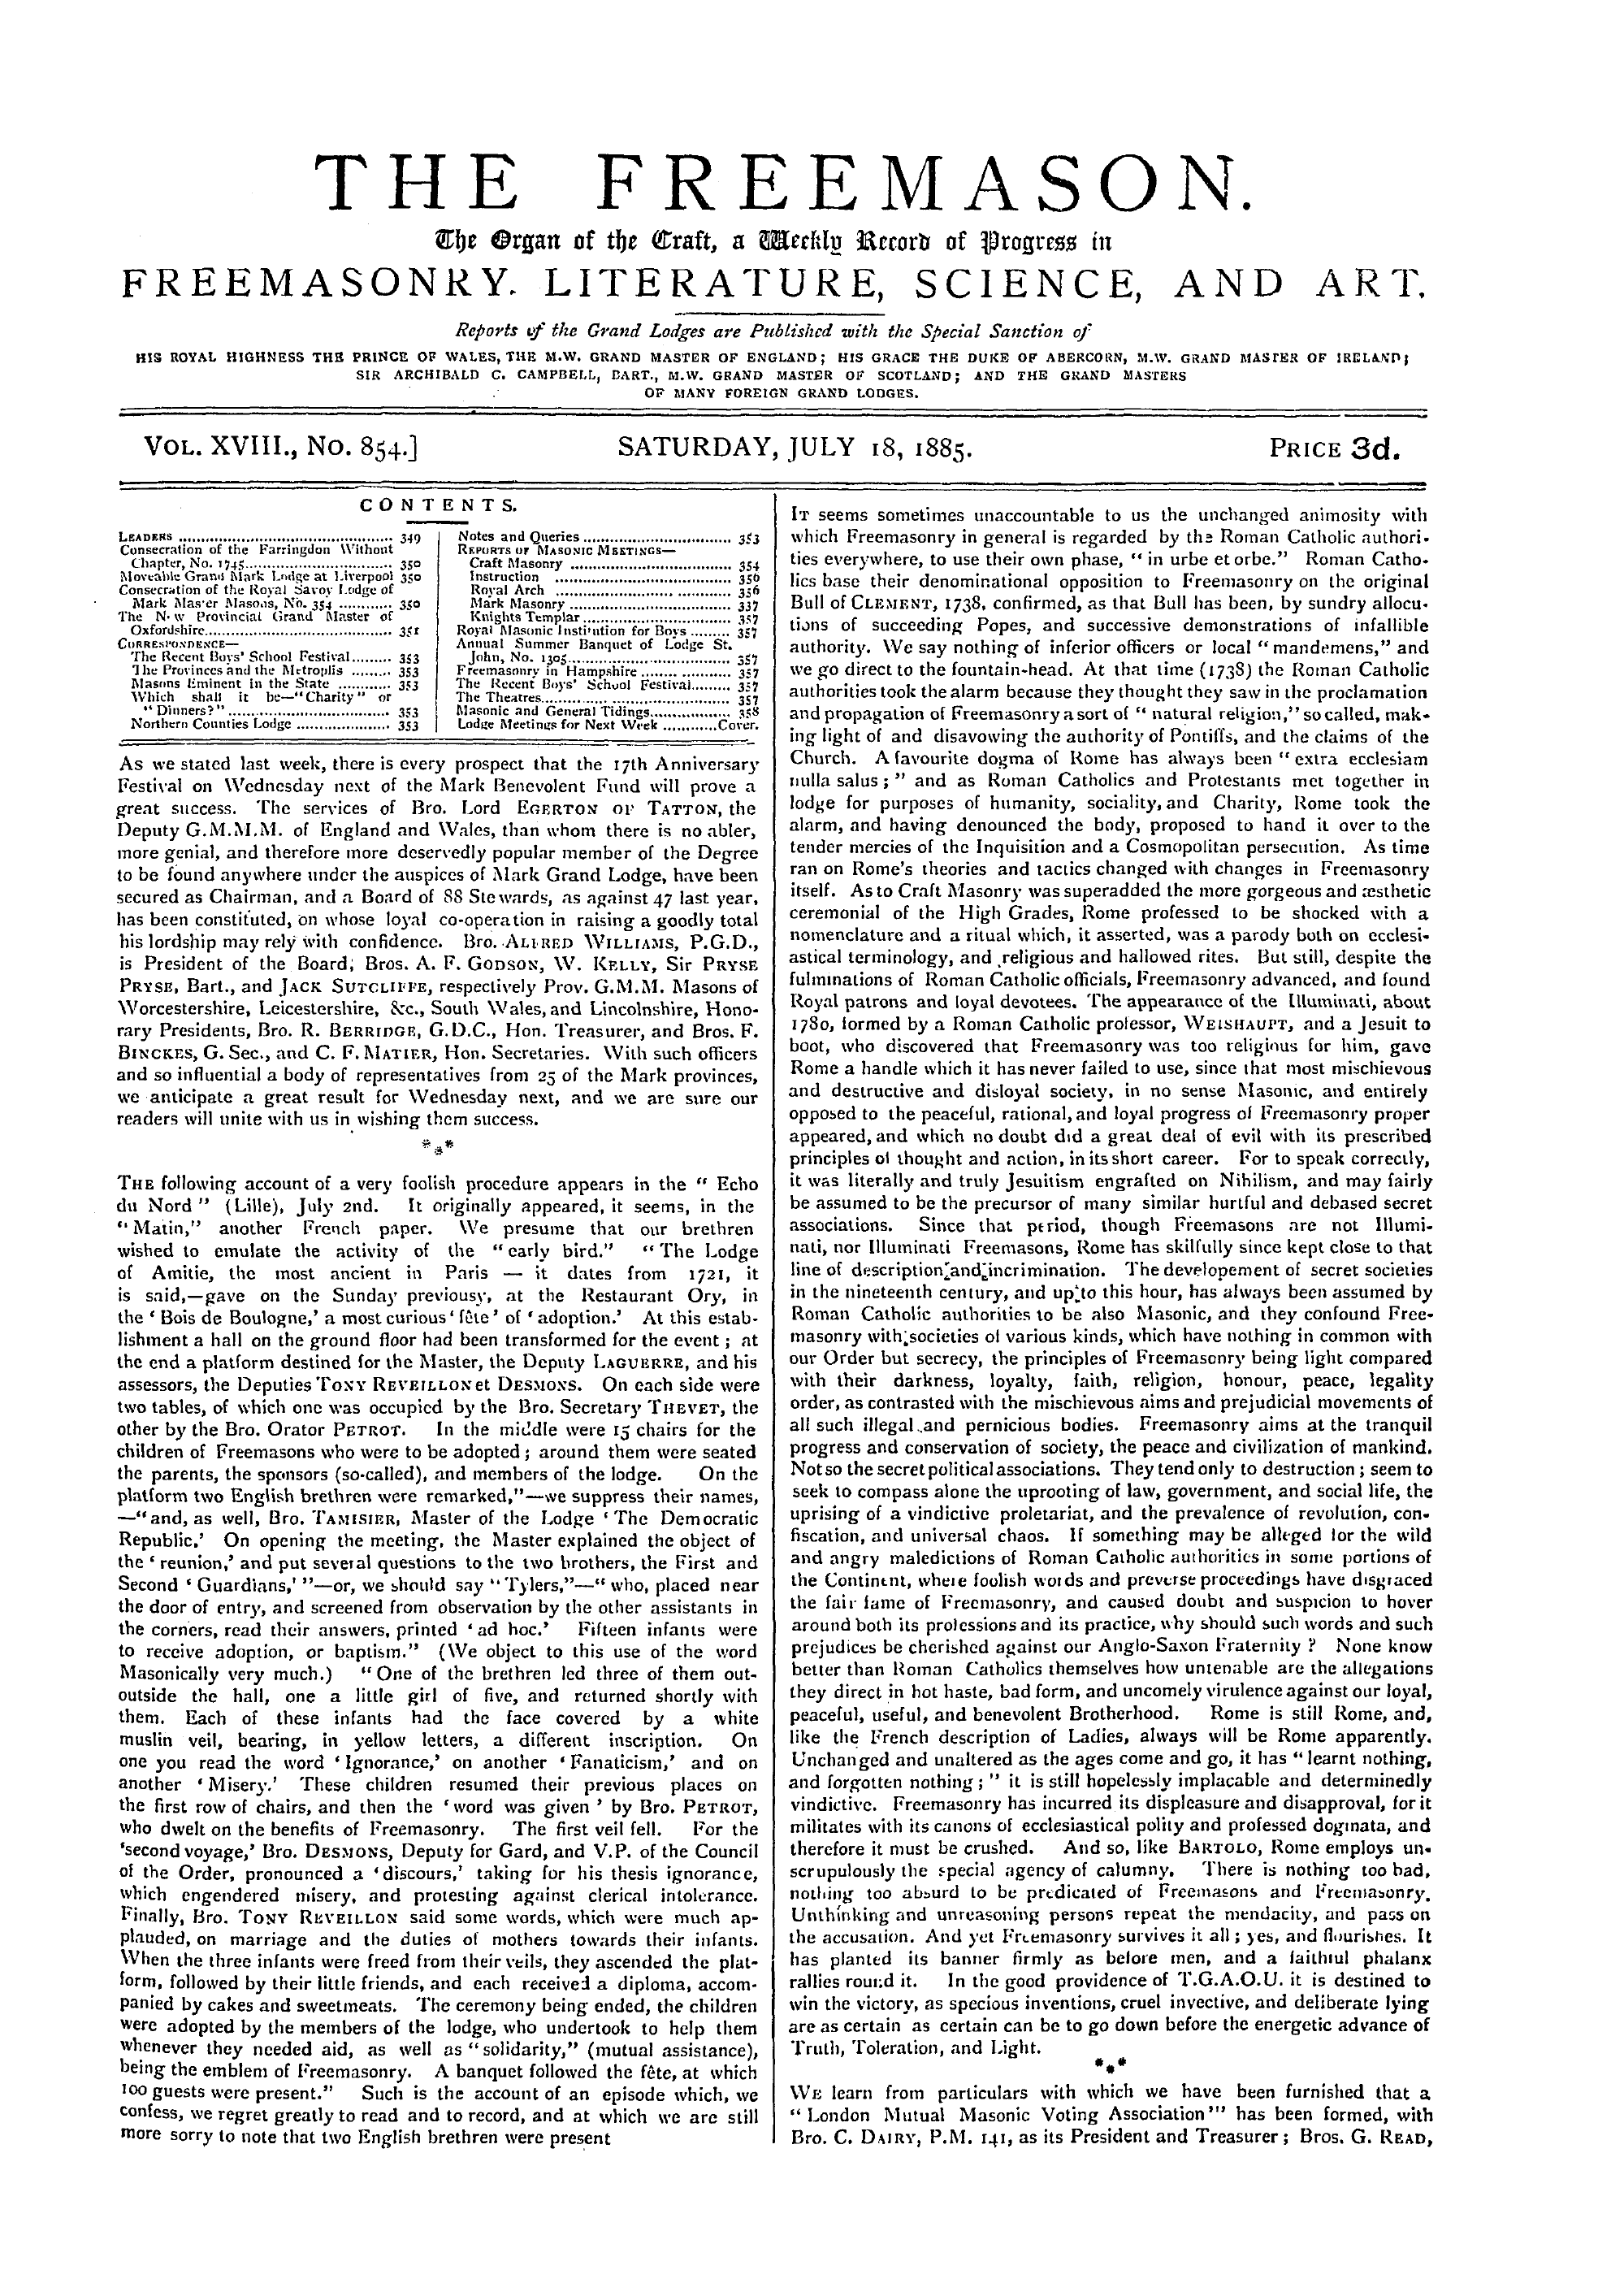 The Freemason: 1885-07-18: 1